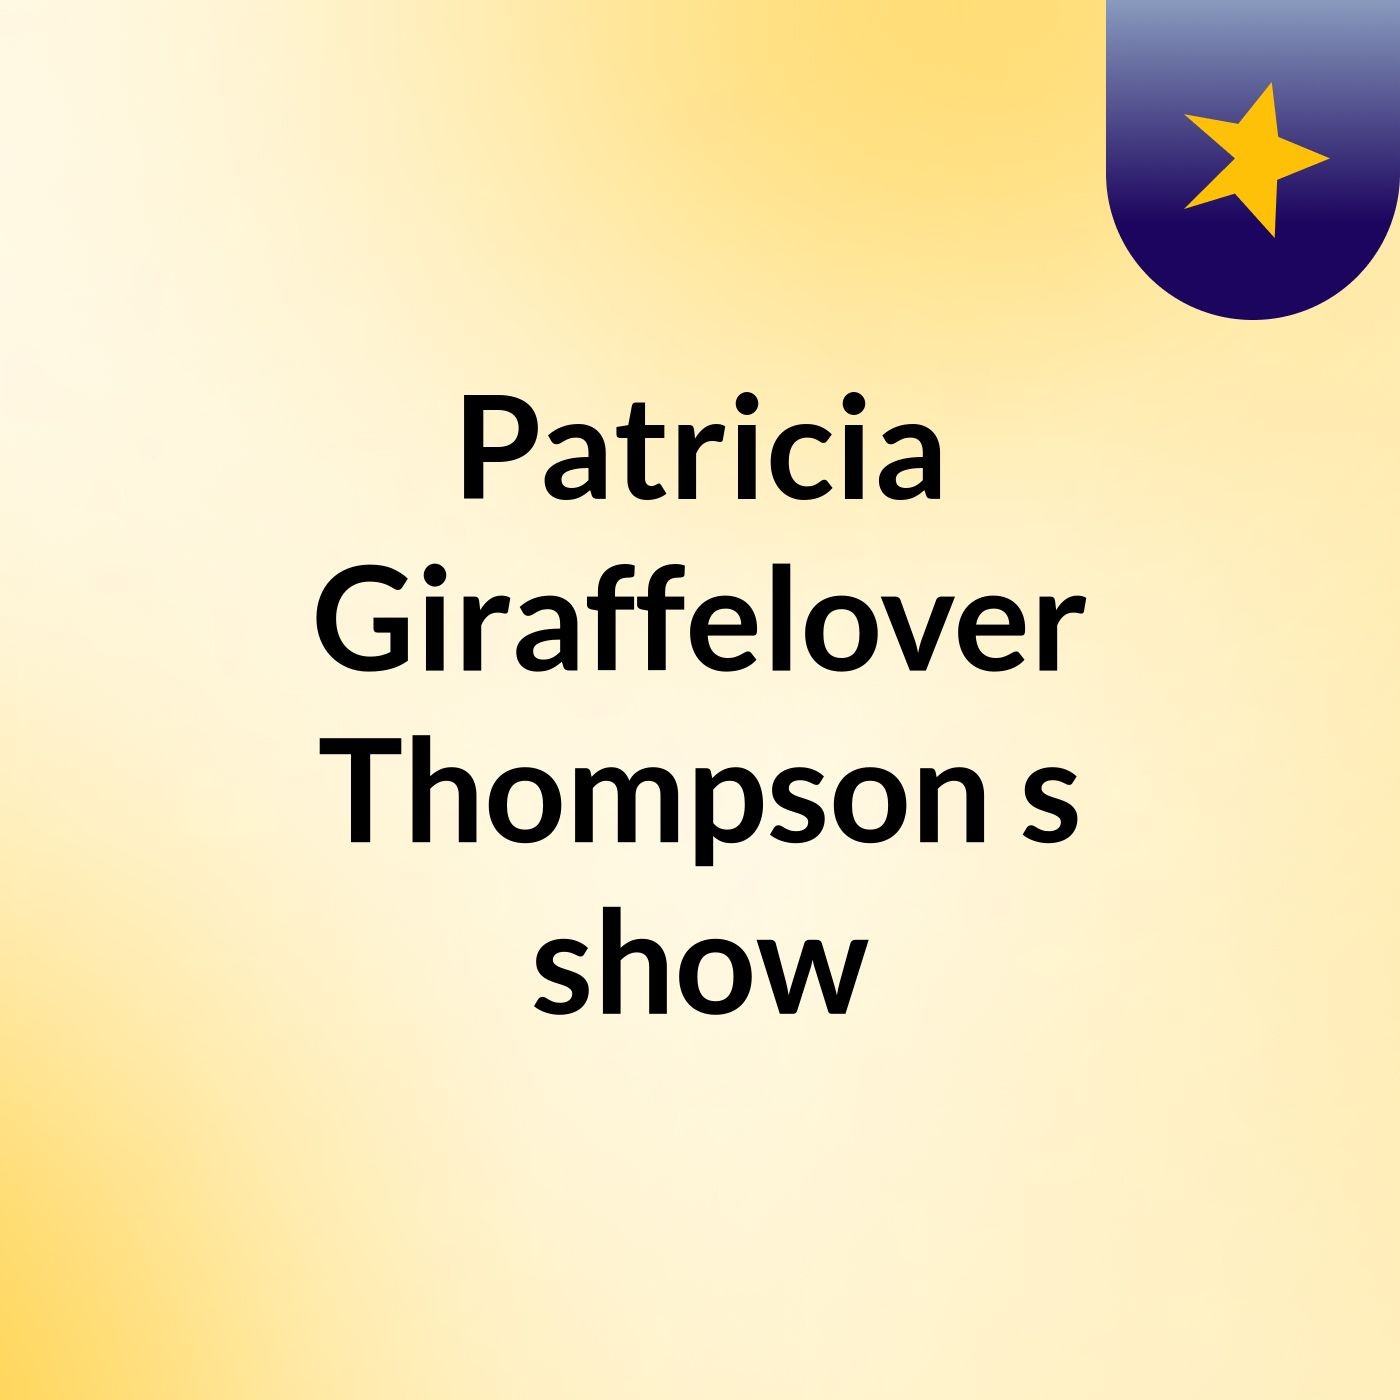 Patricia Giraffelover Thompson's show